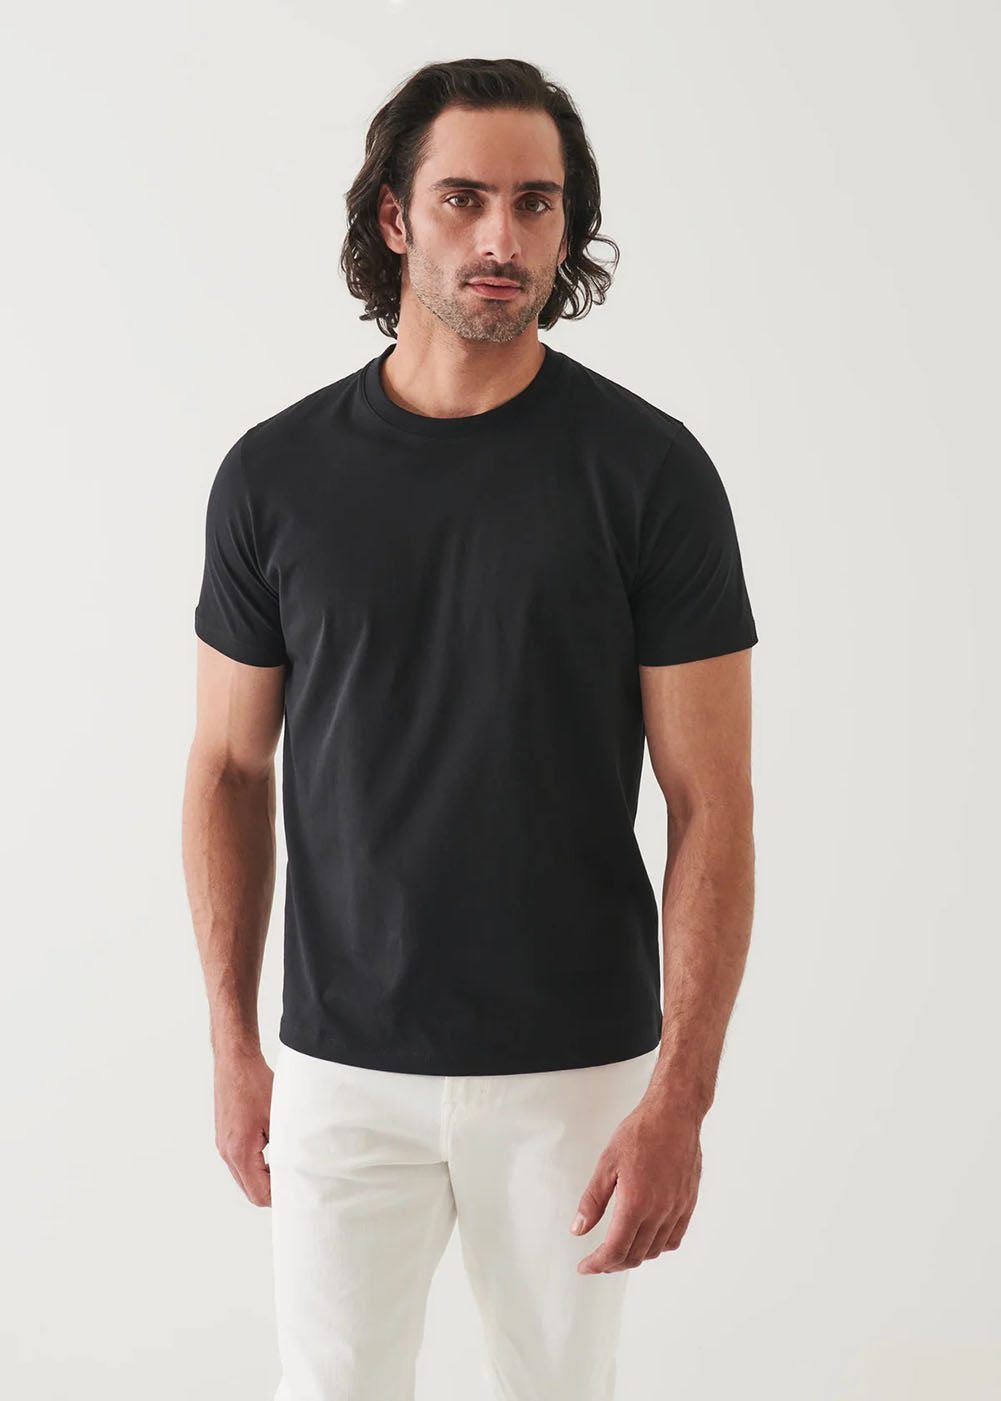 Organic Pima Cotton Short Sleeve Crew T-Shirt - Black - Patrick Assaraf Canada - Danali - P92C01V